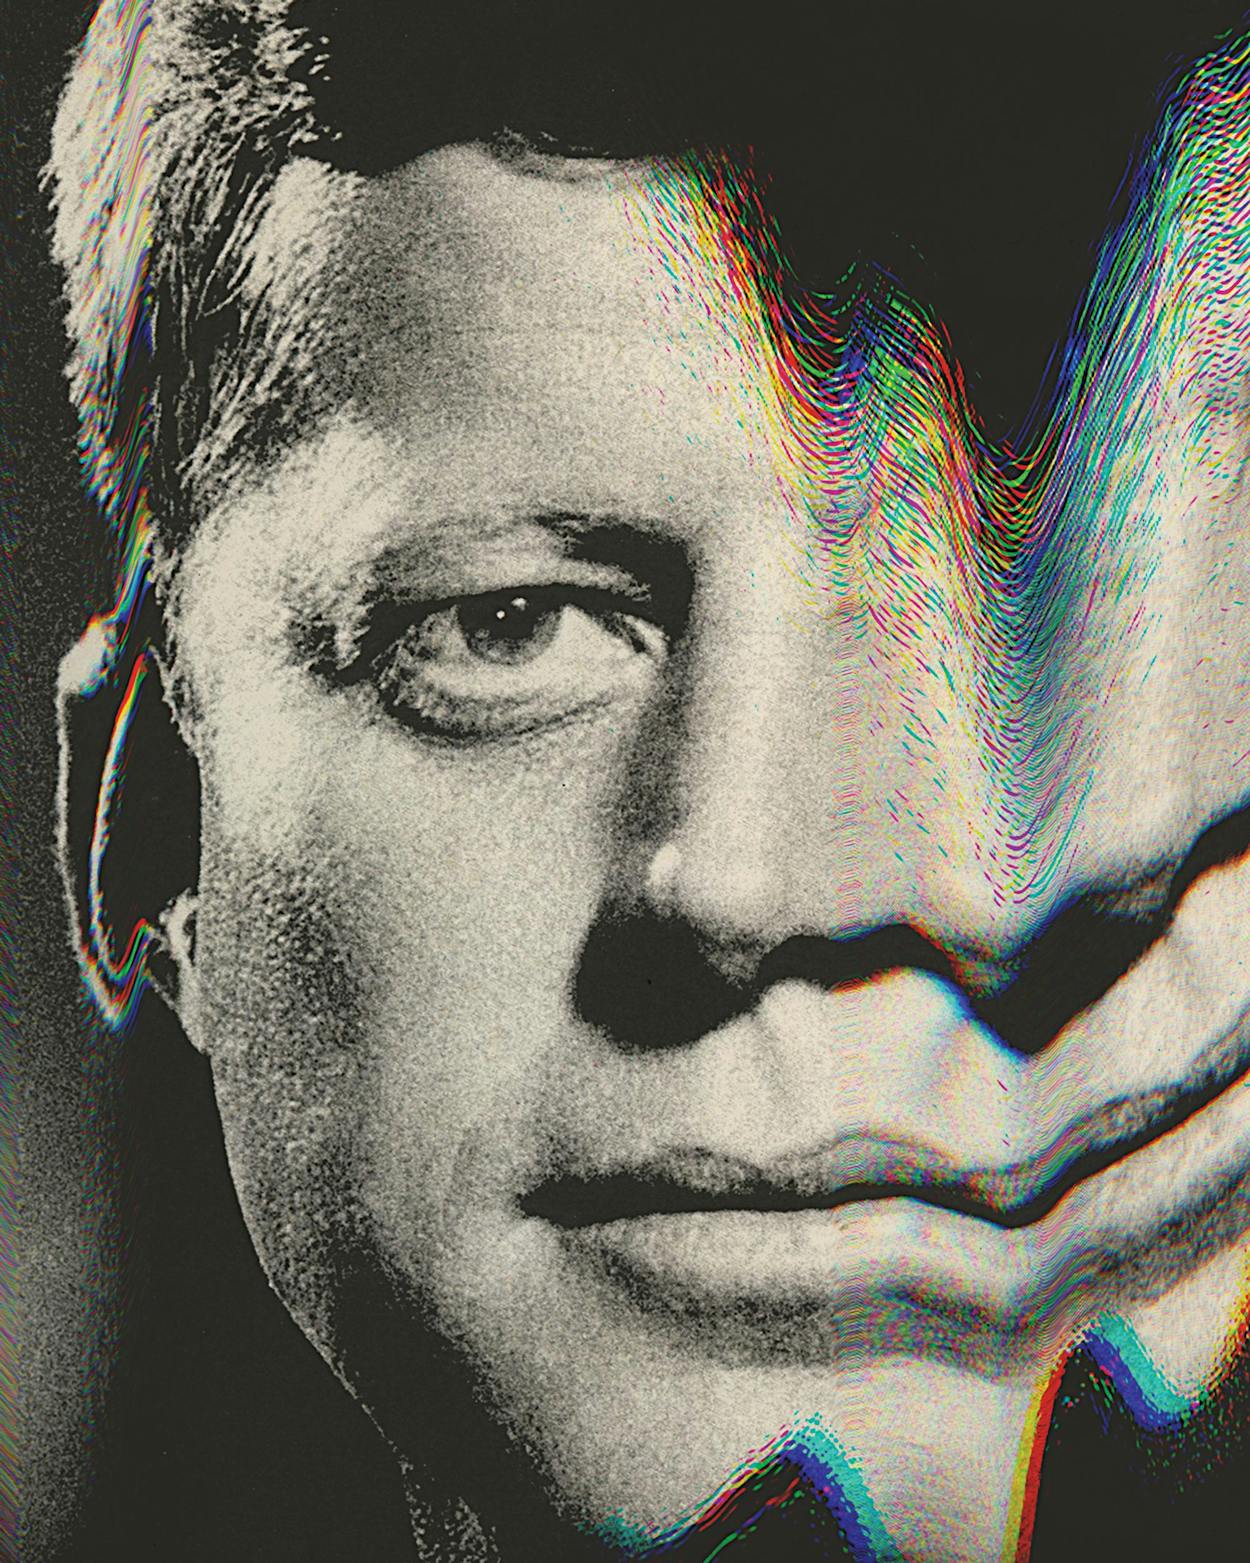 John-F-Kennedy-Assassination-Dallas-60-year-anniversary-hero